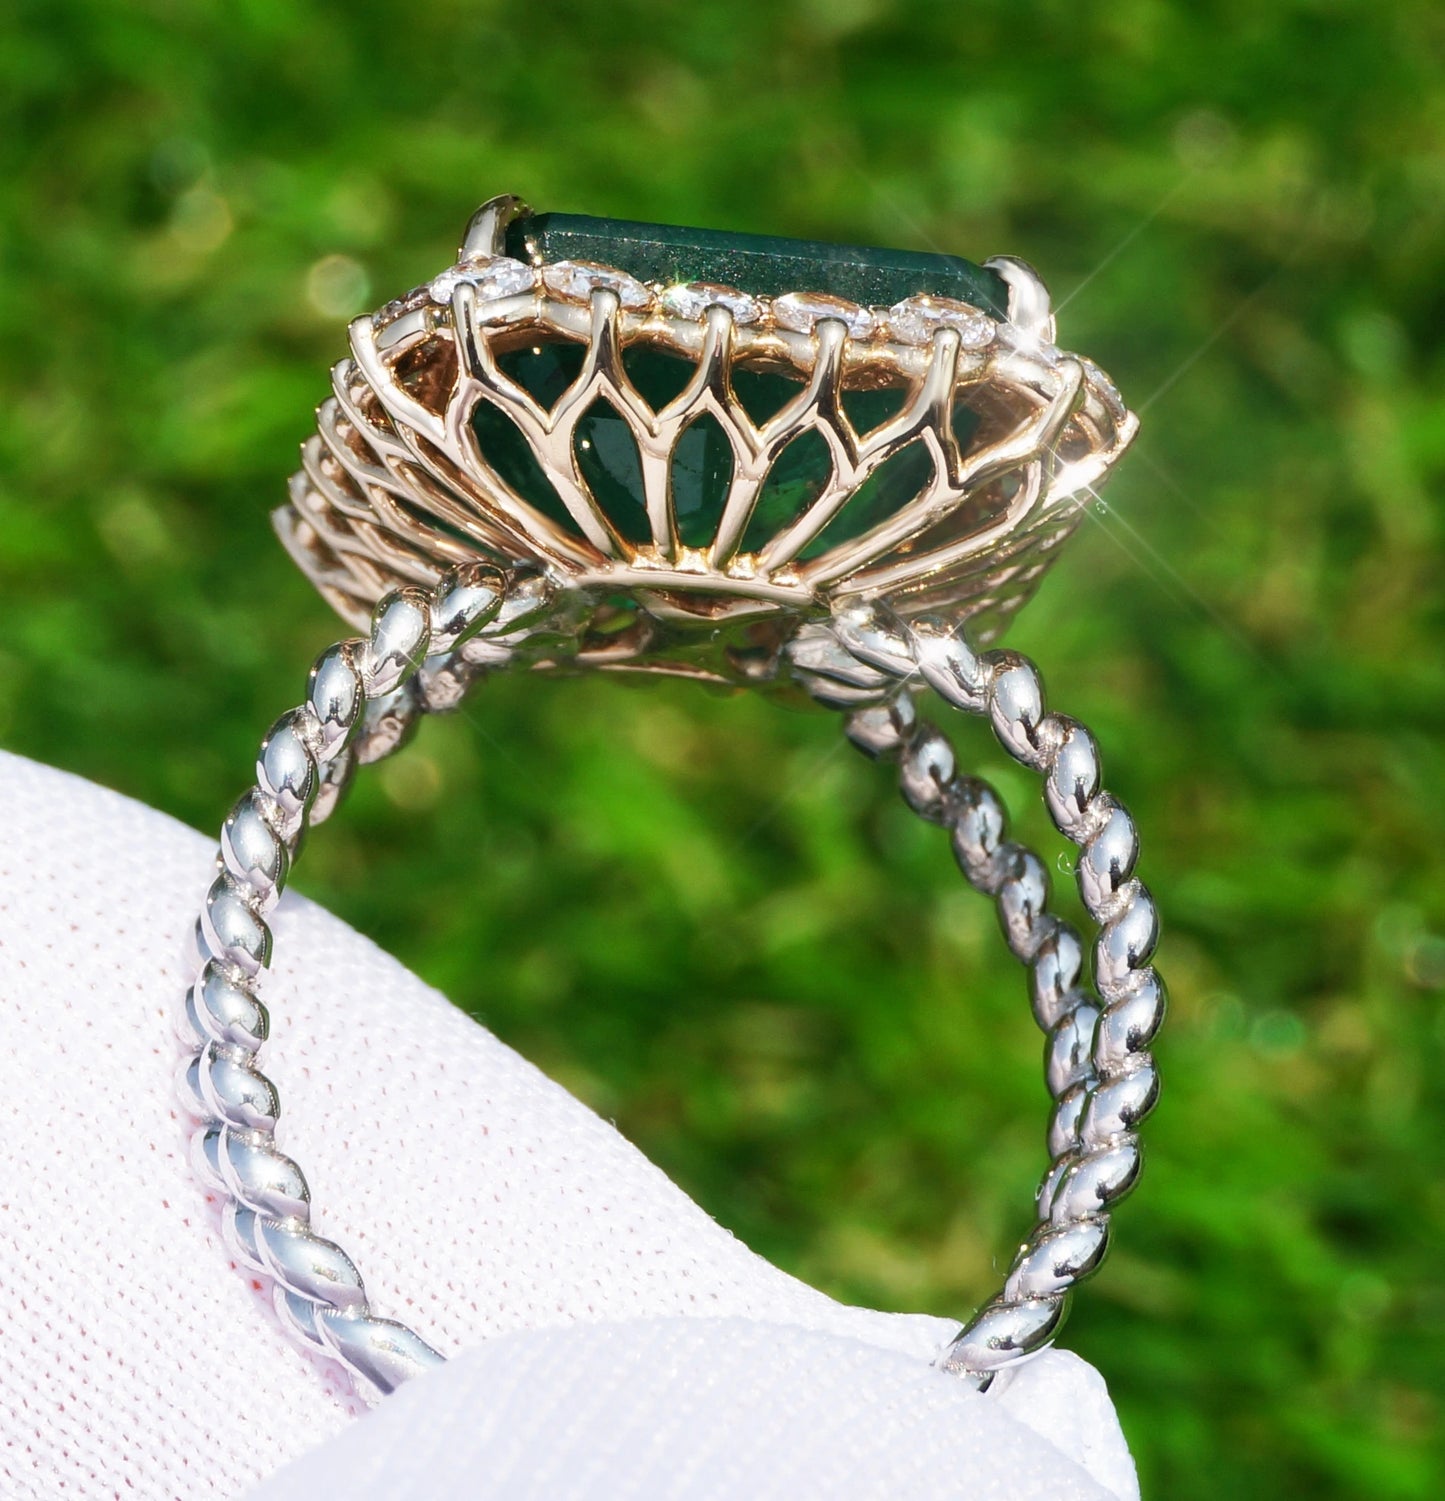 ring Emerald & diamond gold 14k two-toned ( yellow/white ) octagonal cut 9.08ctw gia certified